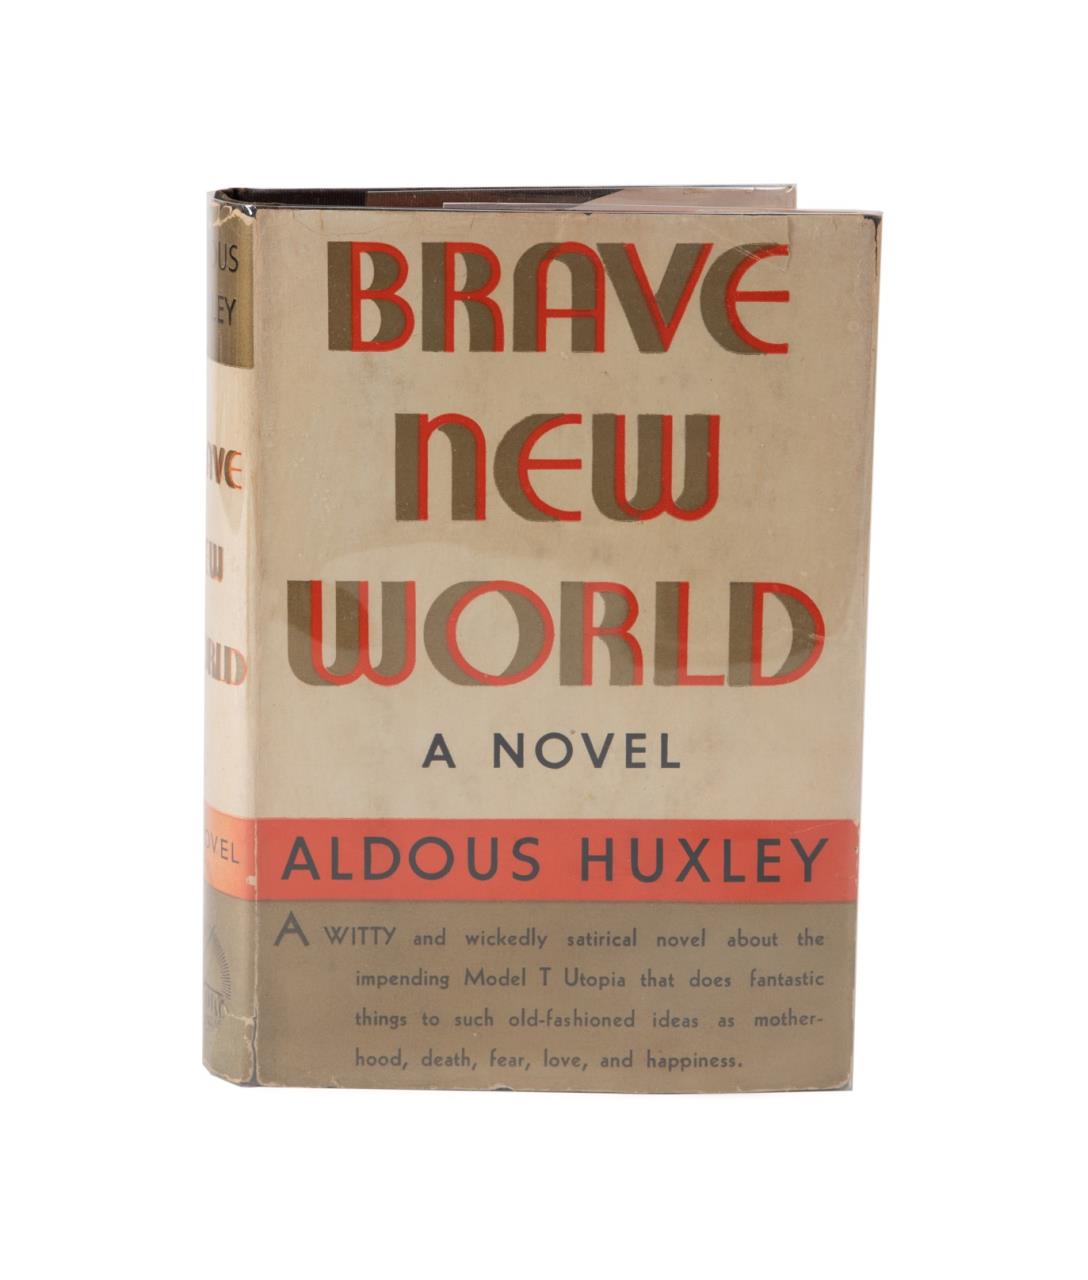 ALDOUS HUXLEY, BRAVE NEW WORLD, SIGNED